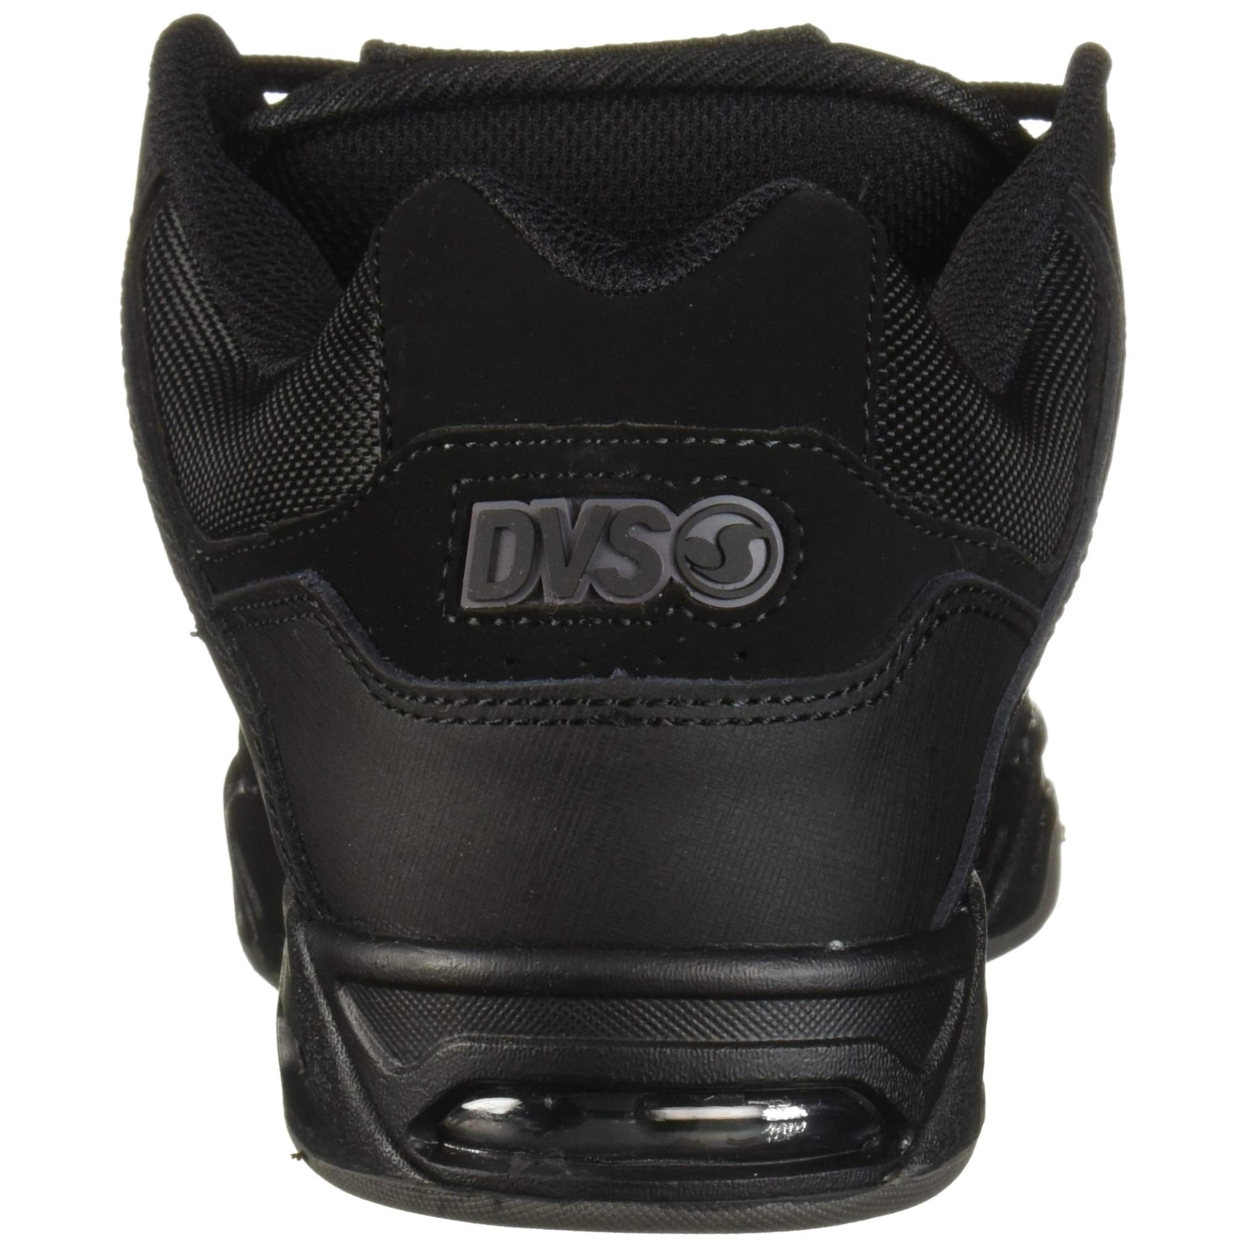 Dvs Footwear Mens Men's Enduro HEIR Skate Shoe BLACK BLACK NUBUCK - BLACK BLACK NUBUCK, 10-M